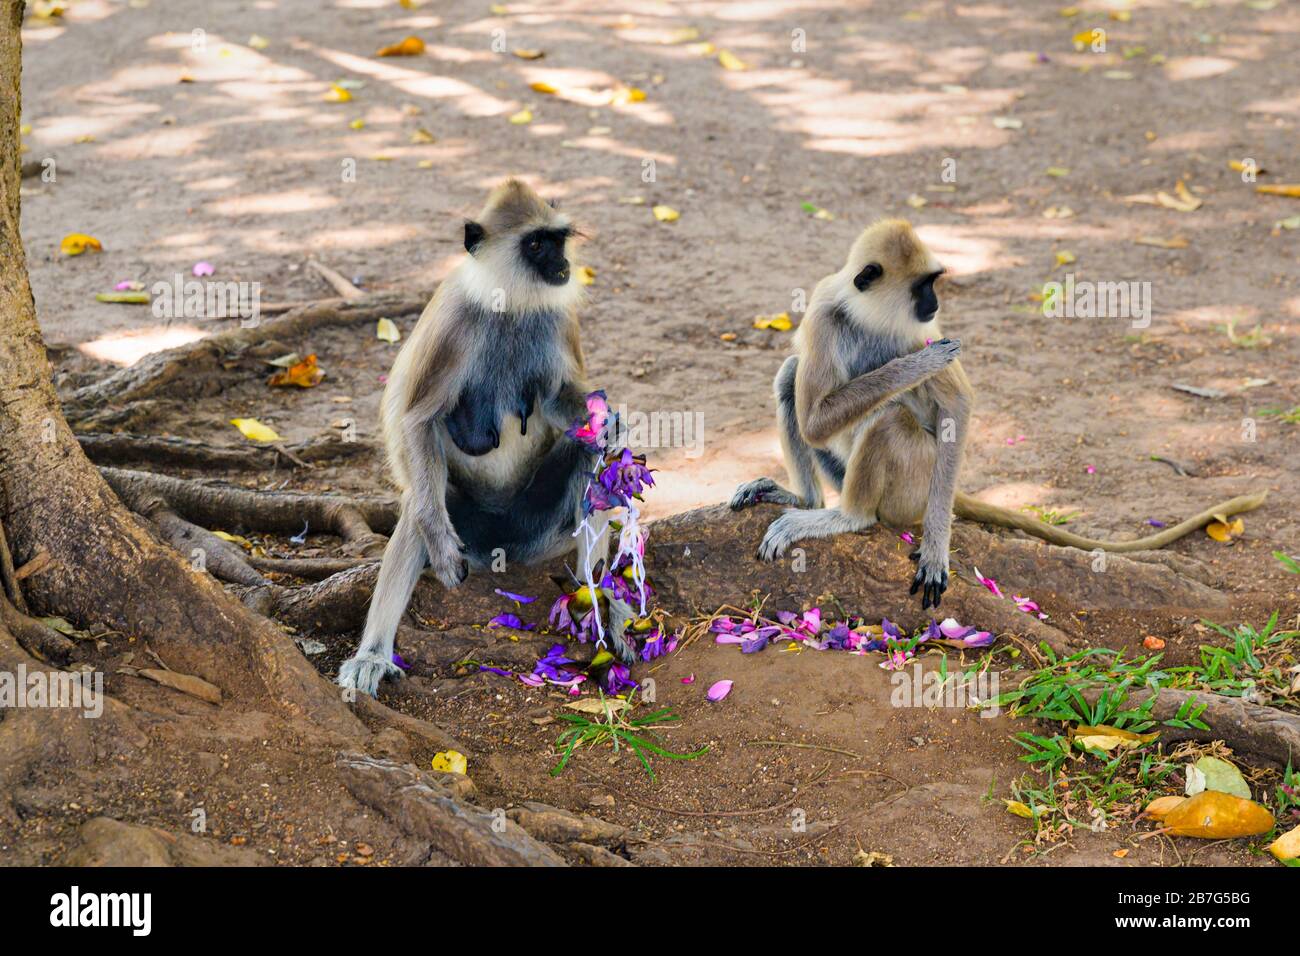 Sri Lanka Cultural Triangle Anuradhapura Mahaseya Dagoba stupe pagoda complex Langur monkeys Semnopithecus entellus eating flowers floral offering Stock Photo